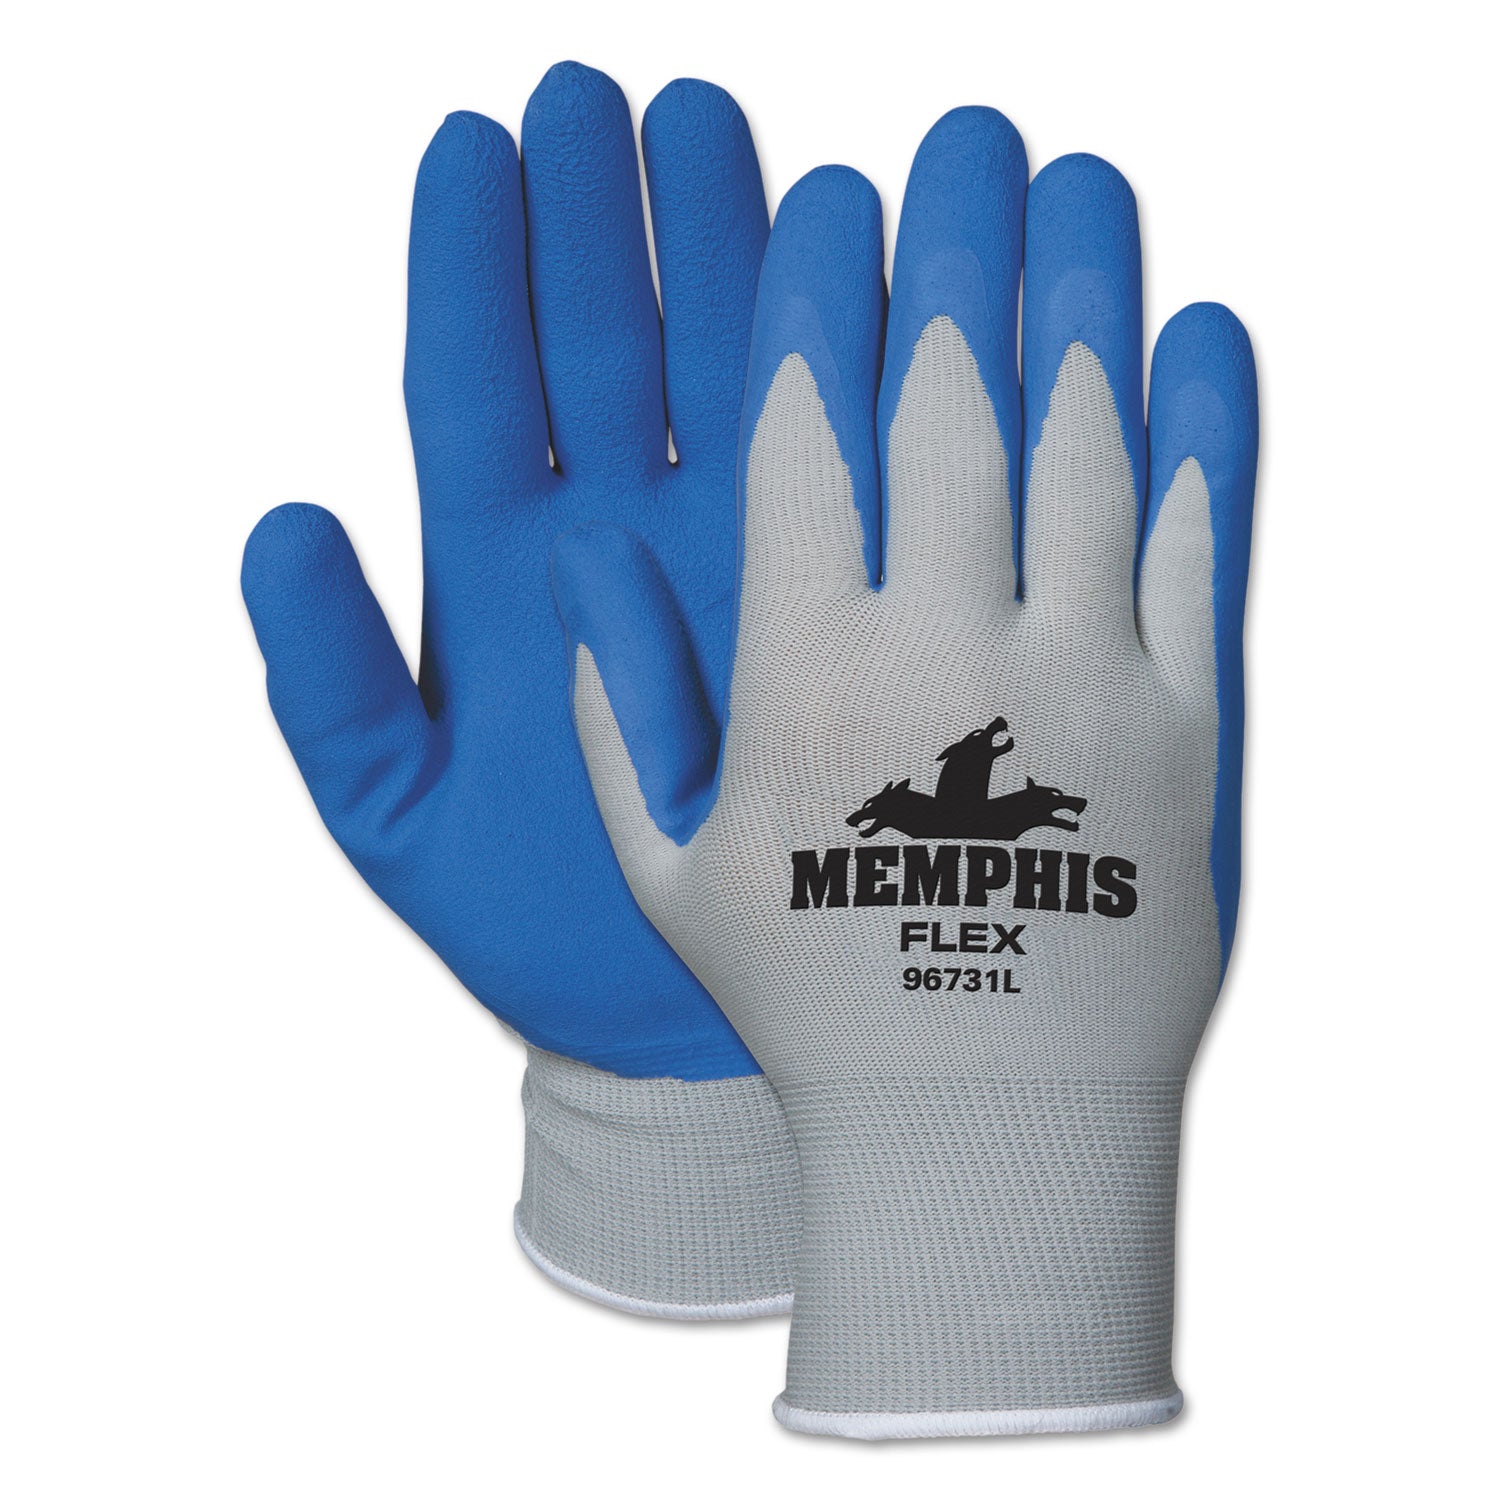 Memphis Flex Seamless Nylon Knit Gloves, Medium, Blue/Gray, Dozen - 